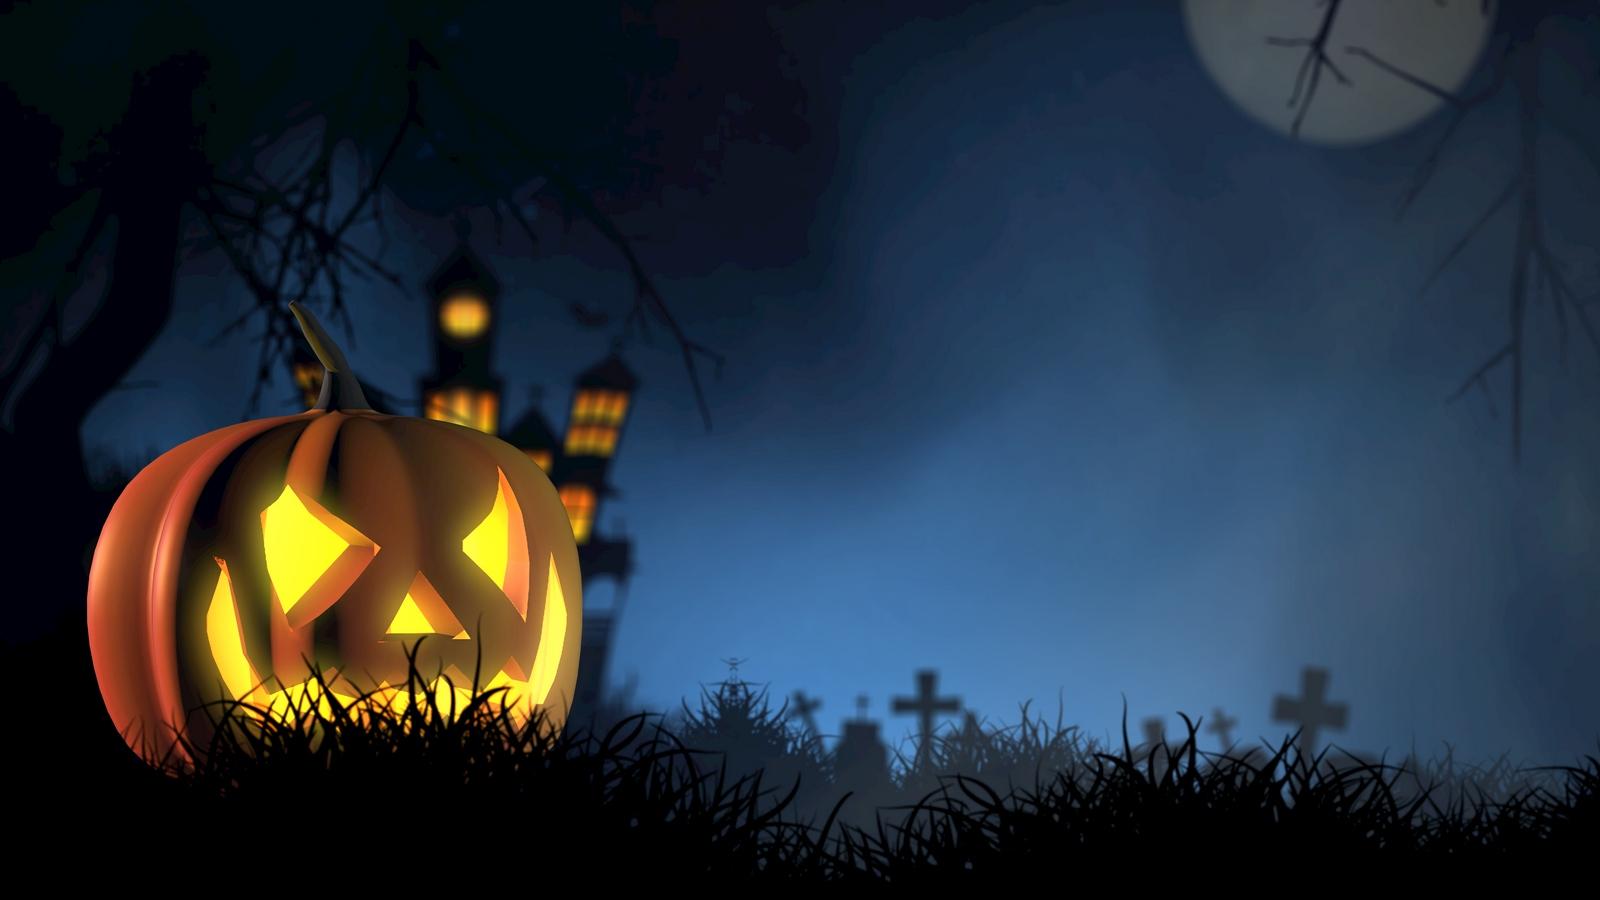 Download wallpaper 1600x900 halloween, pumpkin, spooky, face